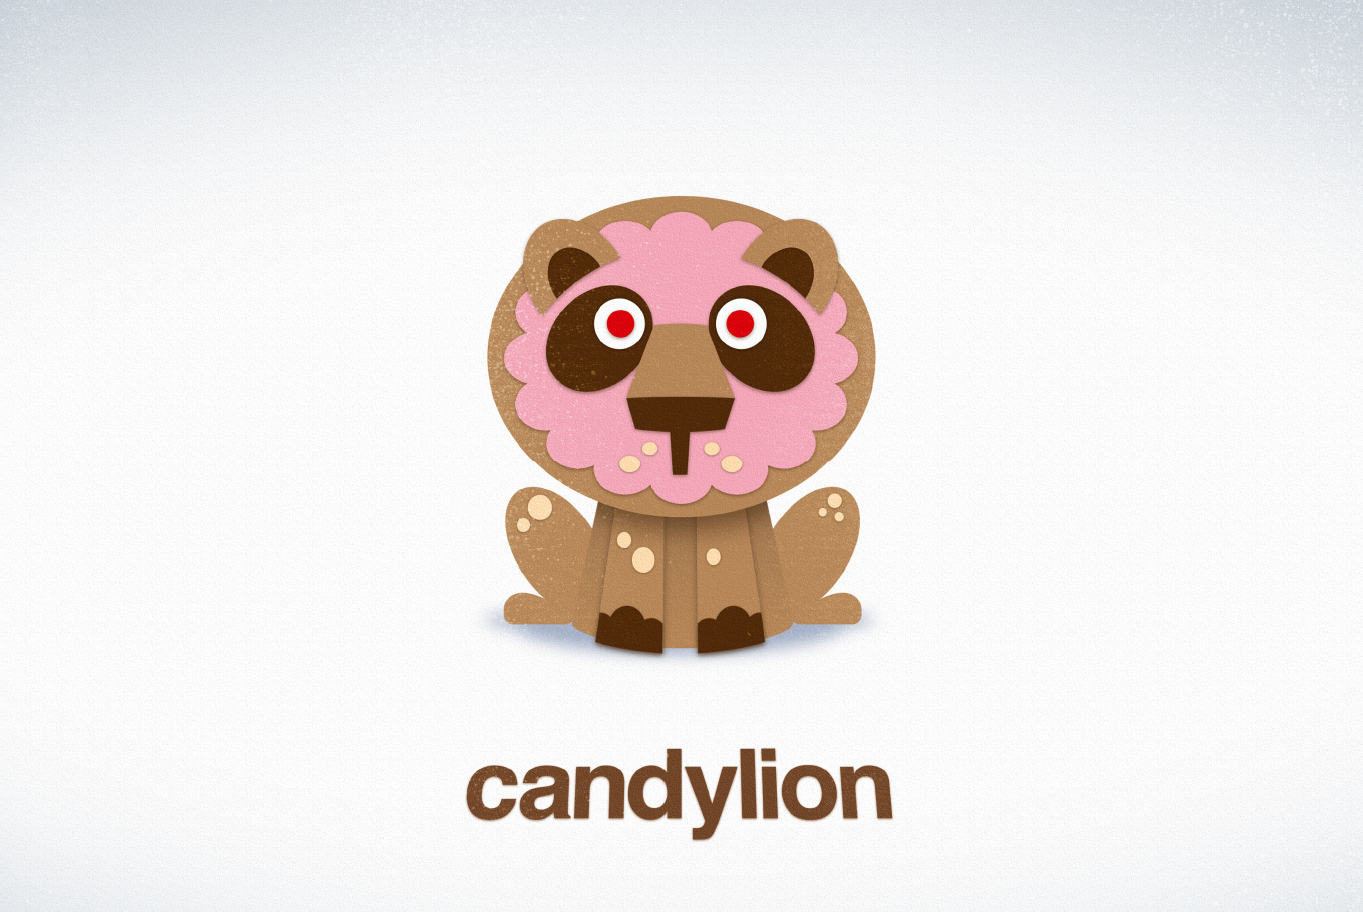 The Candylion - a pink, cartoon lion